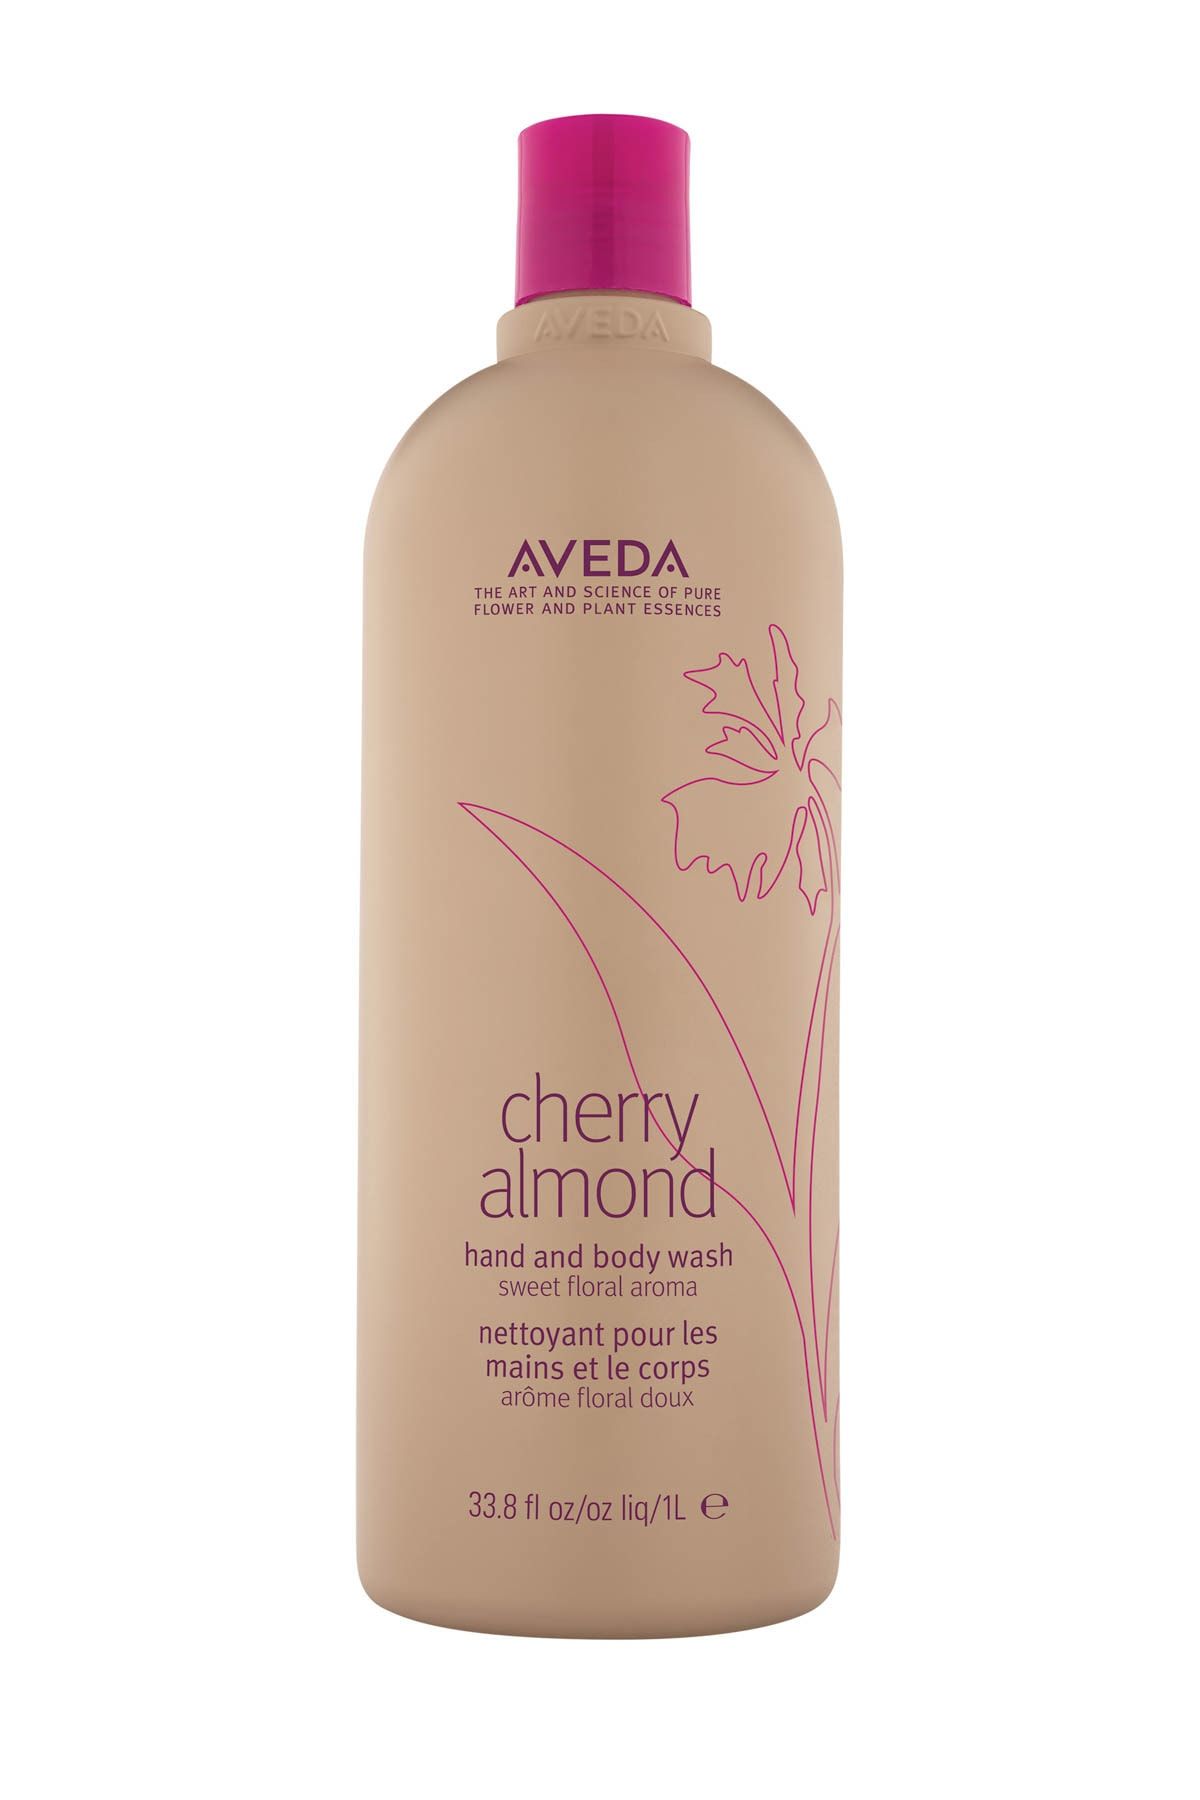 Aveda Cherry Almond Hand and Body Wash